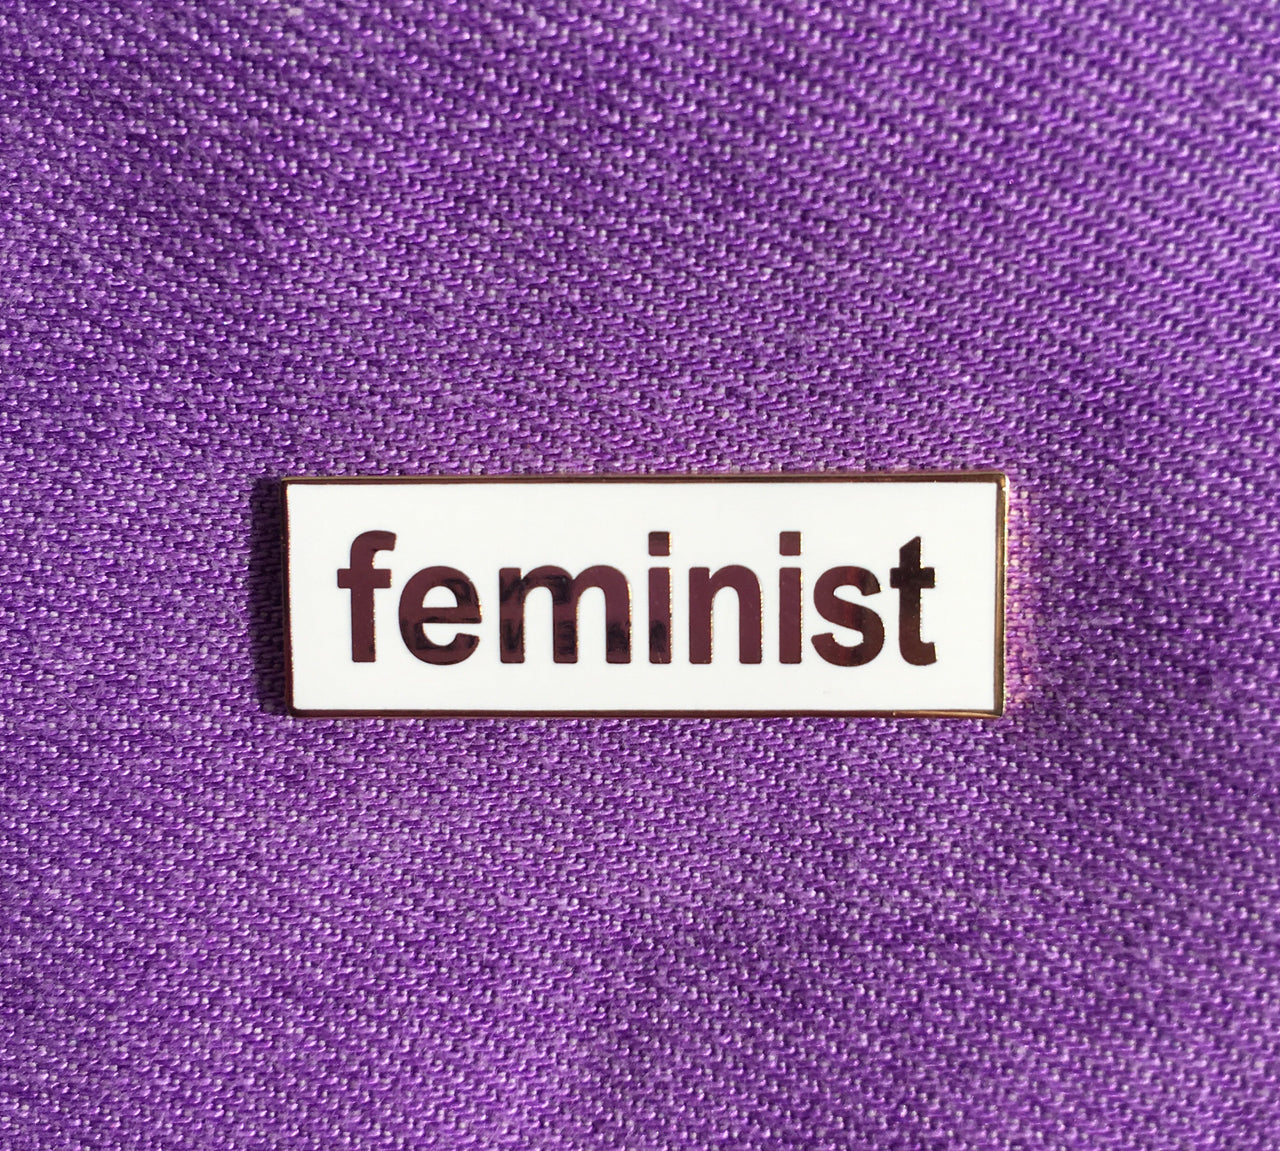 Feminist enamel pin - Radical Buttons